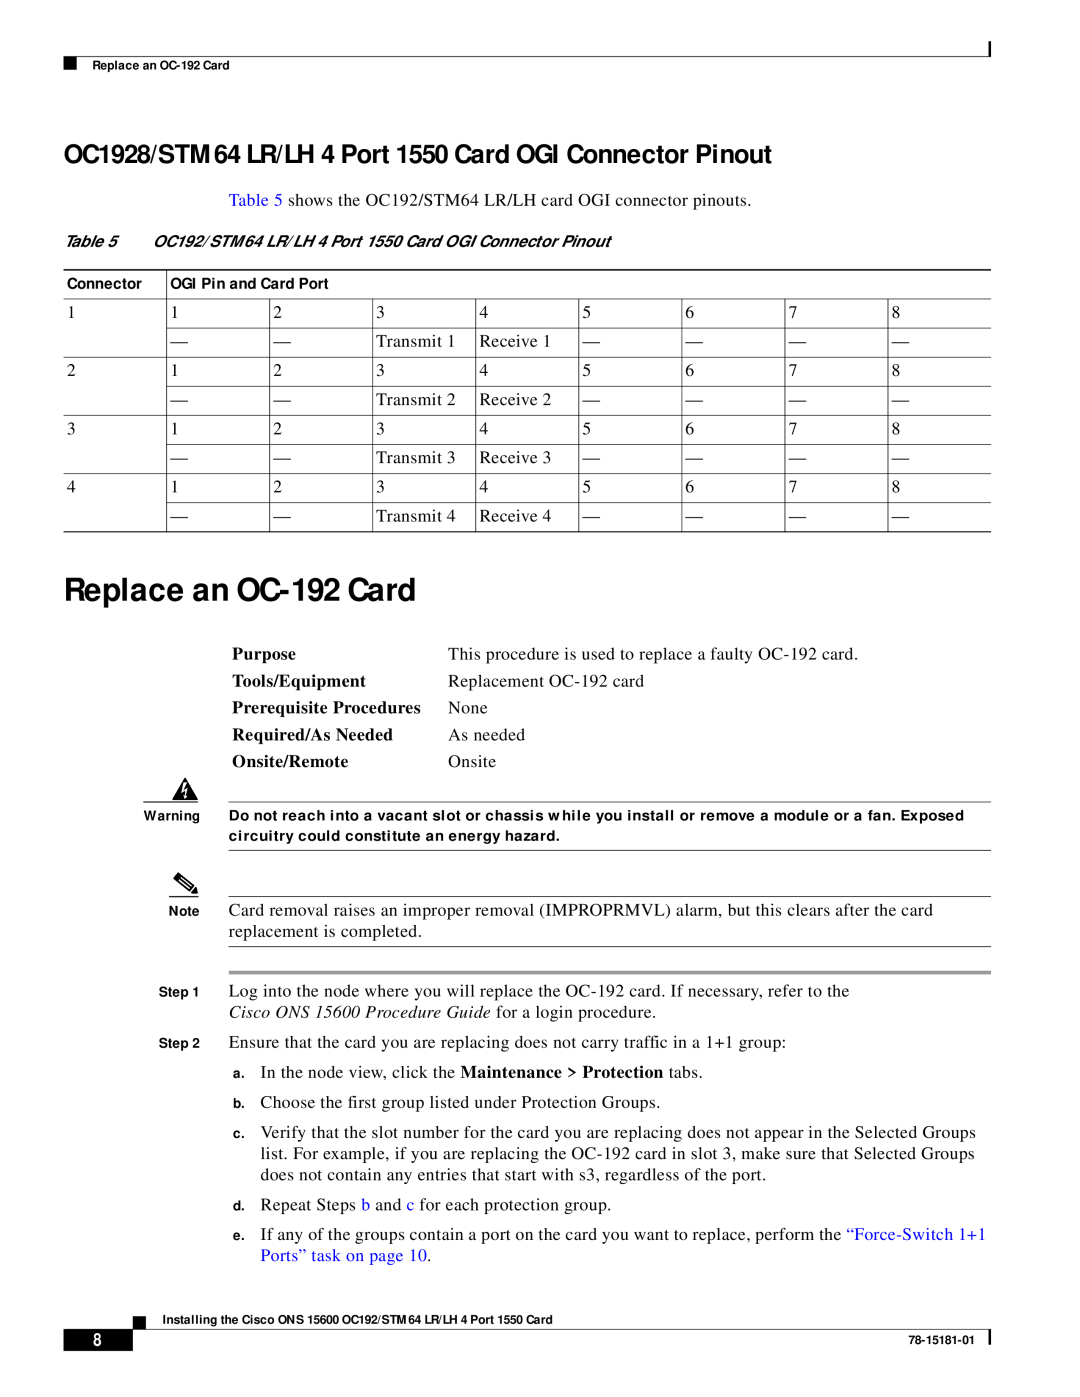 Cisco Systems OC192/STM64 LR/LH 4 Replace an OC-192 Card, OC1928/STM64 LR/LH 4 Port 1550 Card OGI Connector Pinout 